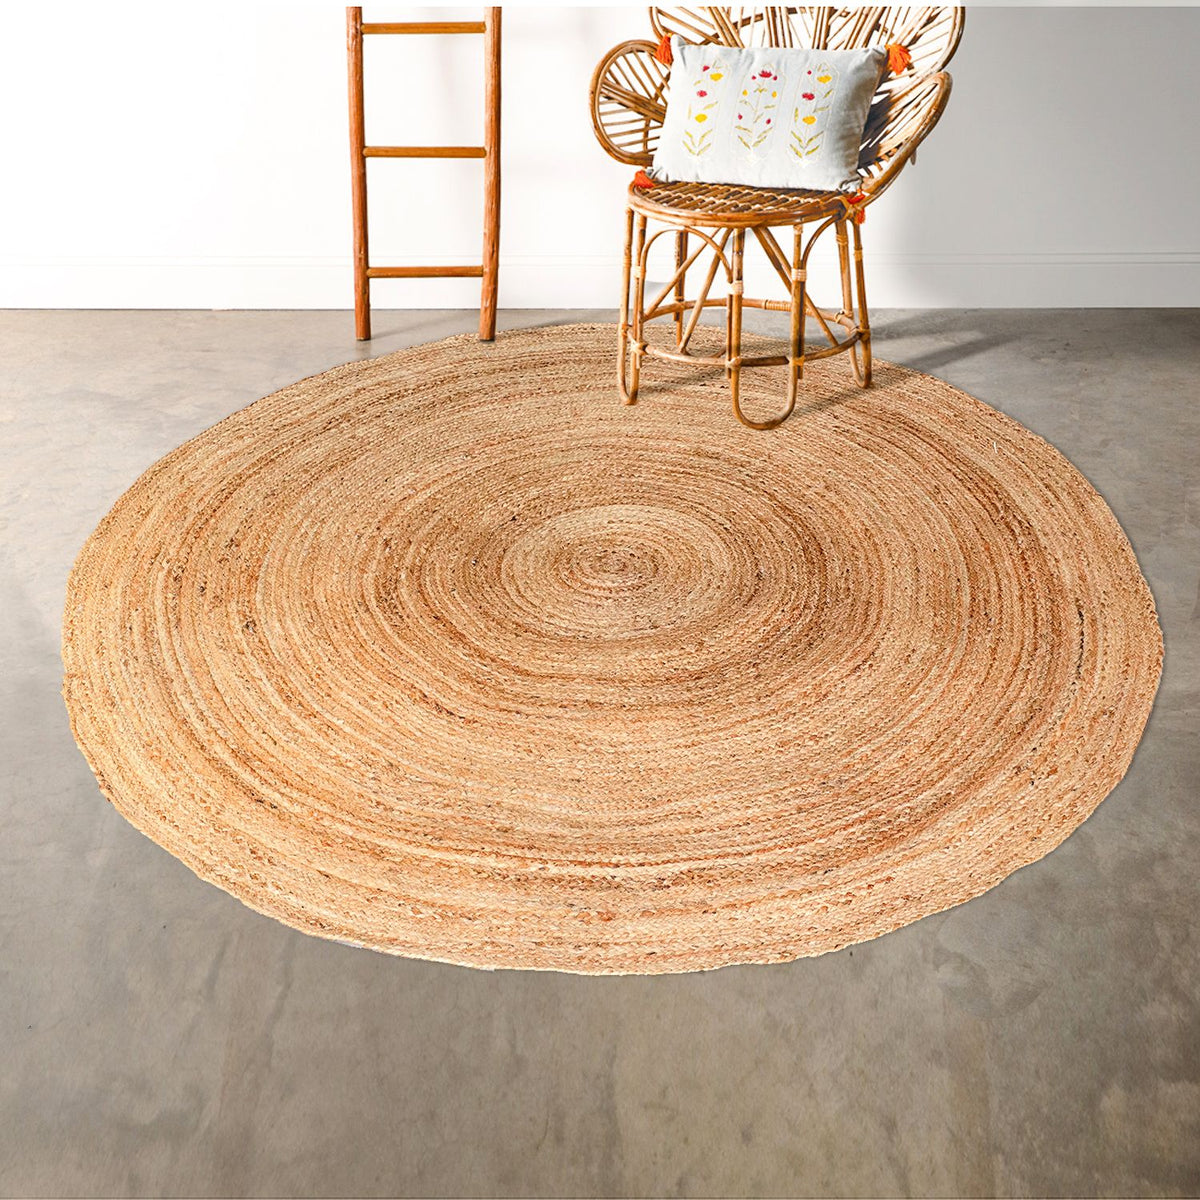 Circles of Life - Luxe Rug - Hand braided Handmade Jute Carpet - Organic and Sustainable